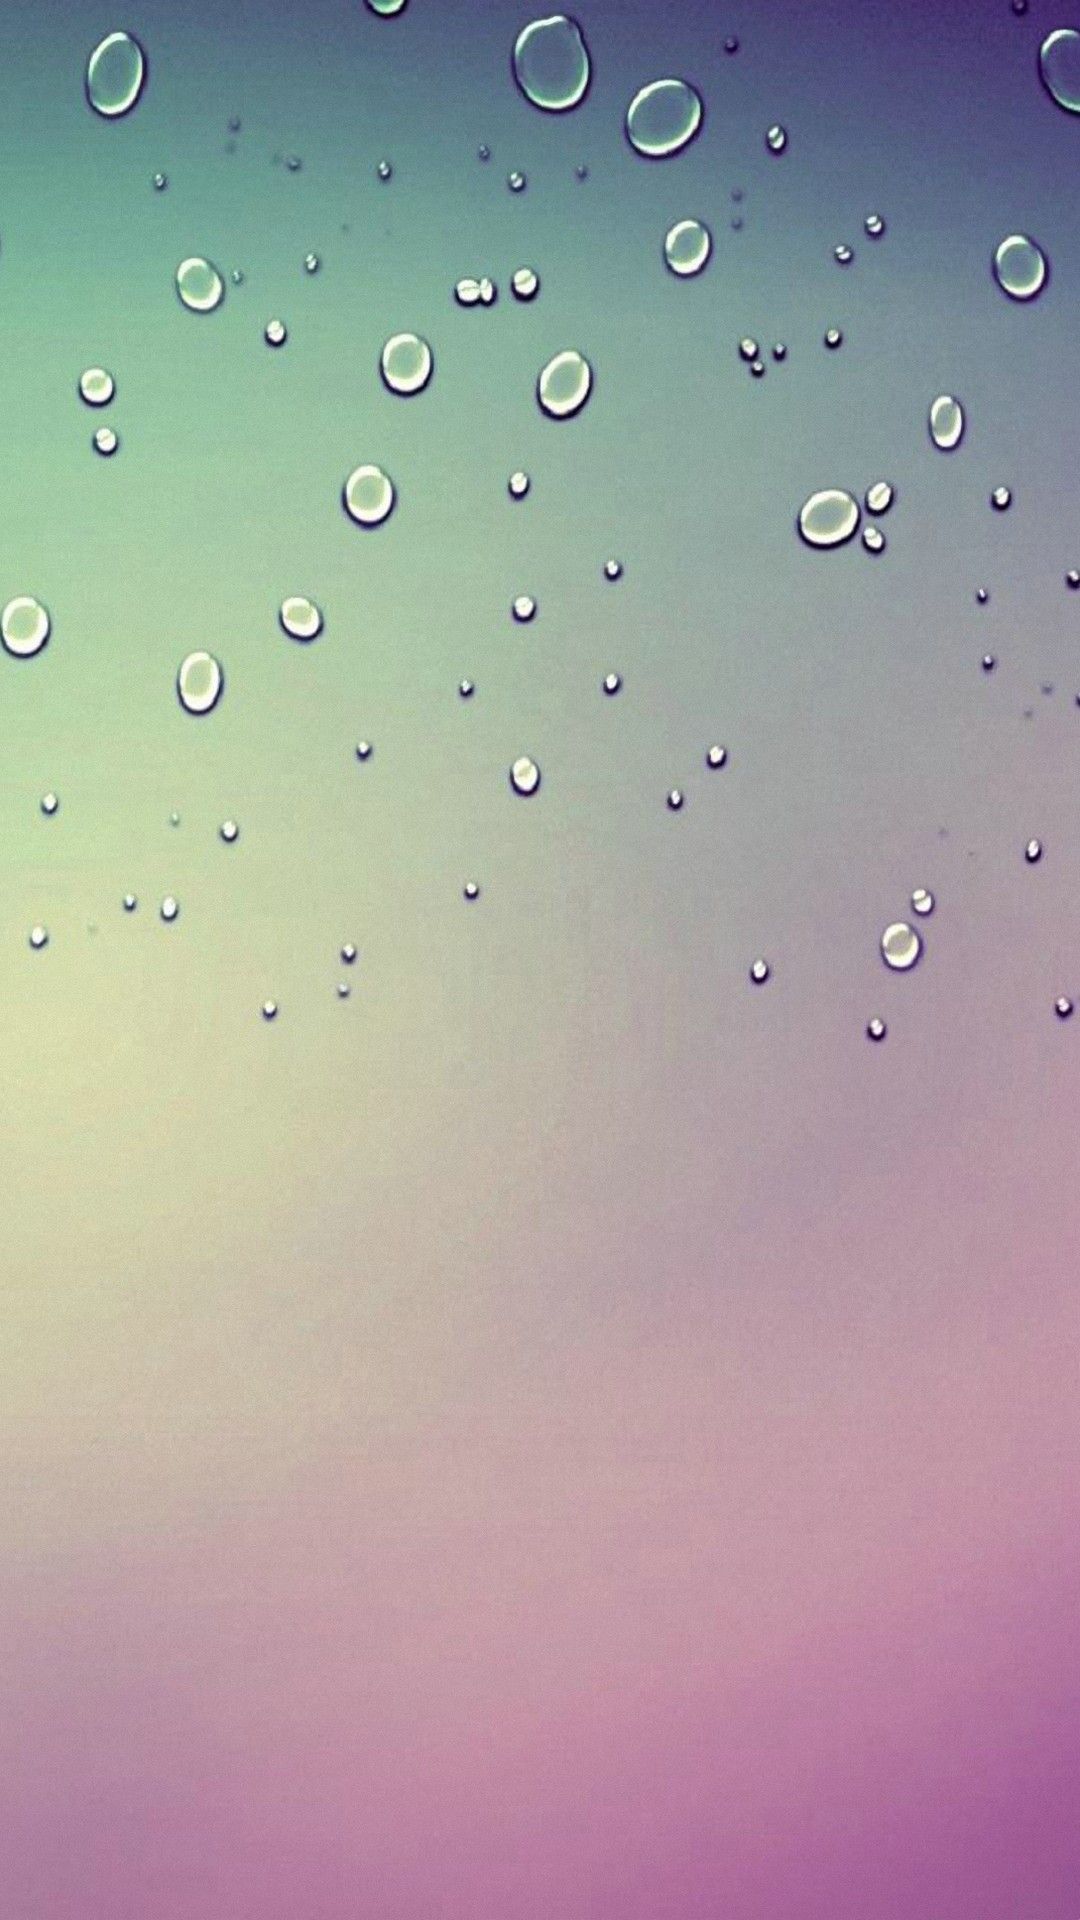 Rain Wallpaper Android - 2019 fondos de pantalla de Android